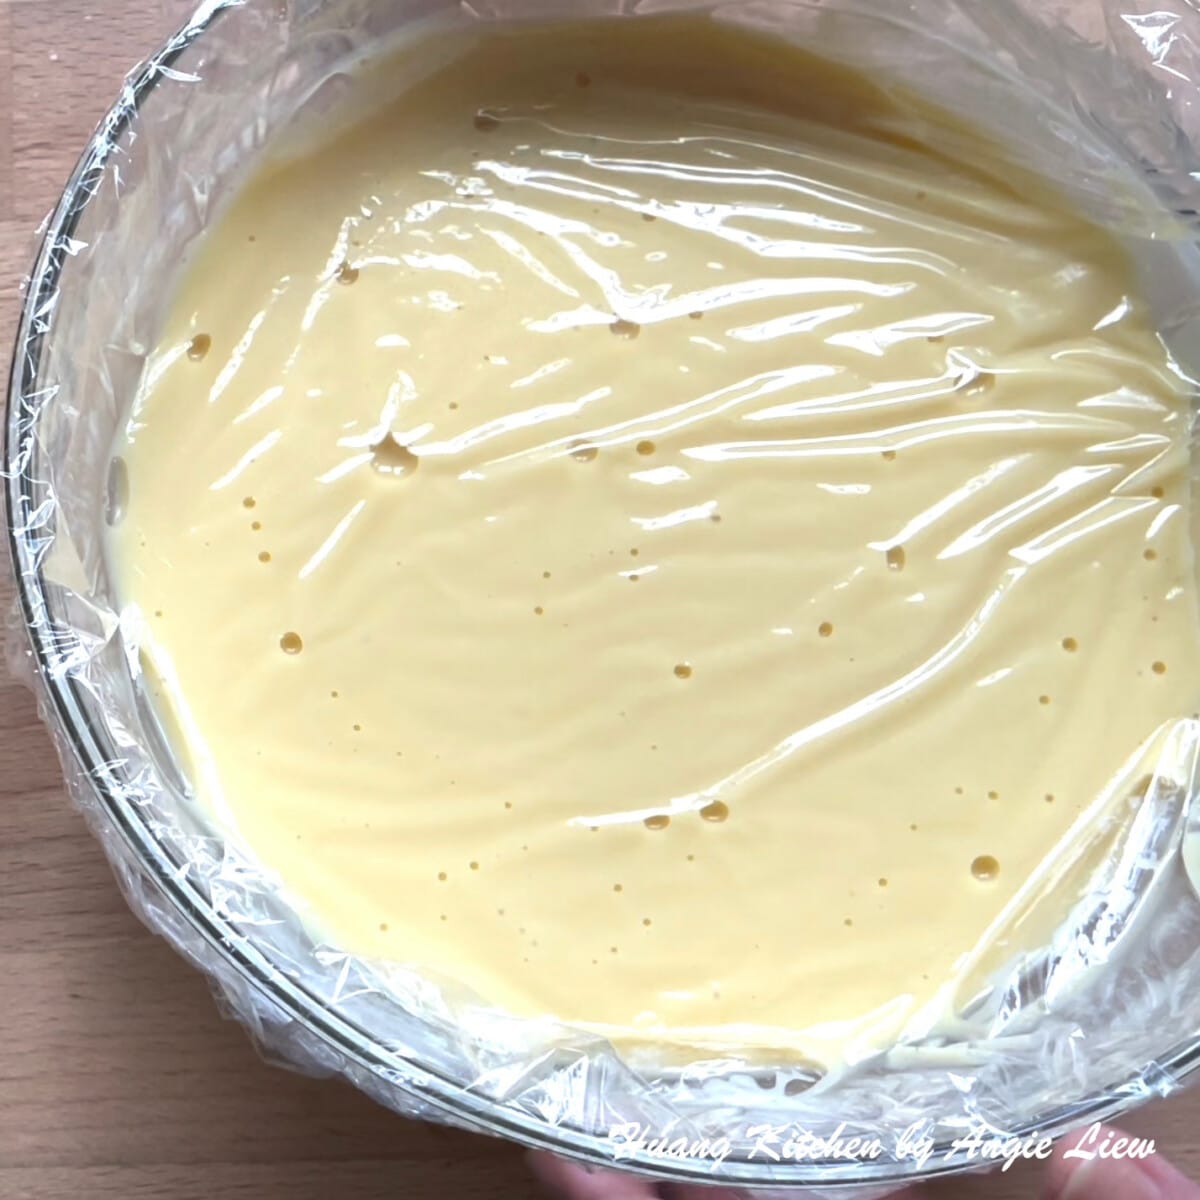 Easy Homemade Tiramisu Recipe by Huang Kitchen -Prepare cream filling